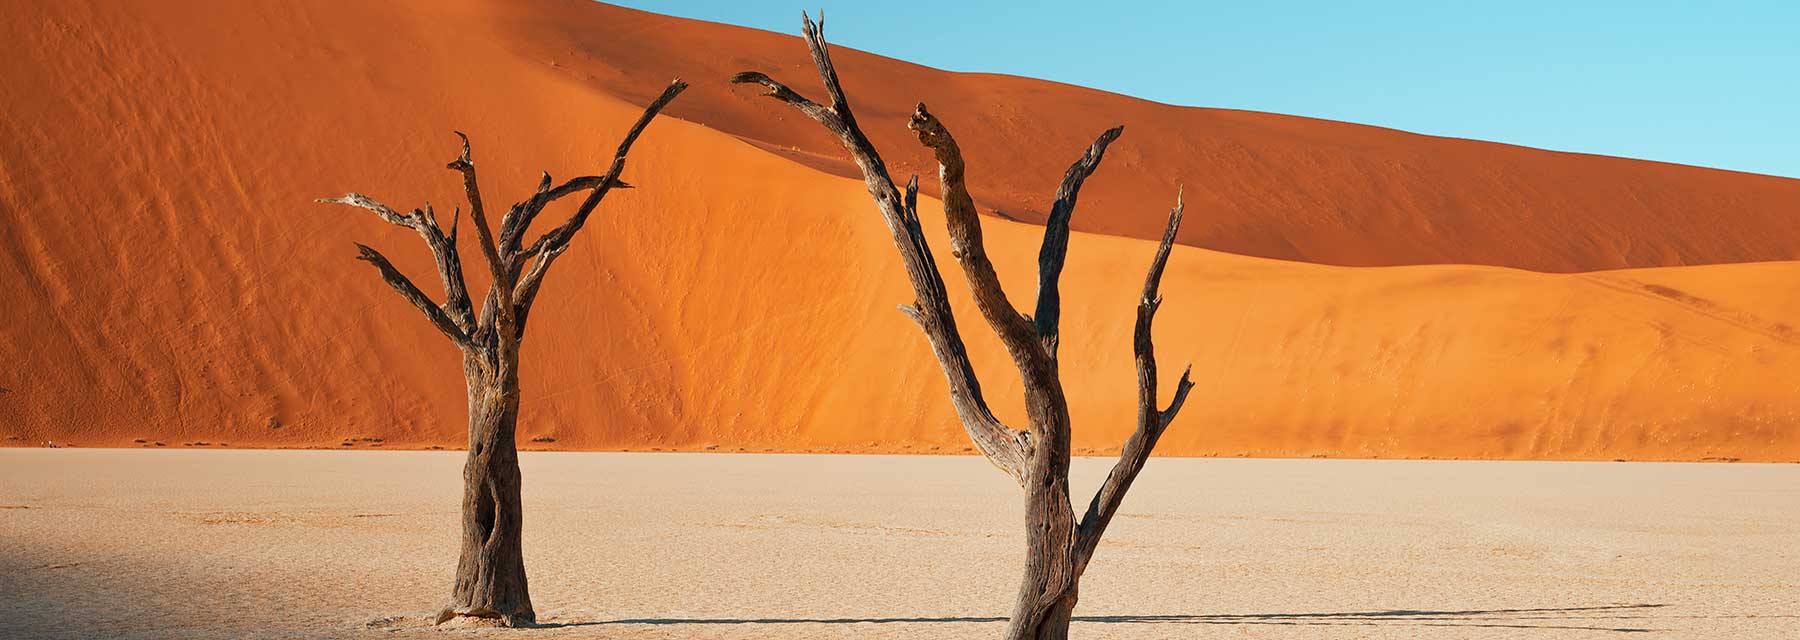 a surreal desert landscape in Namibia